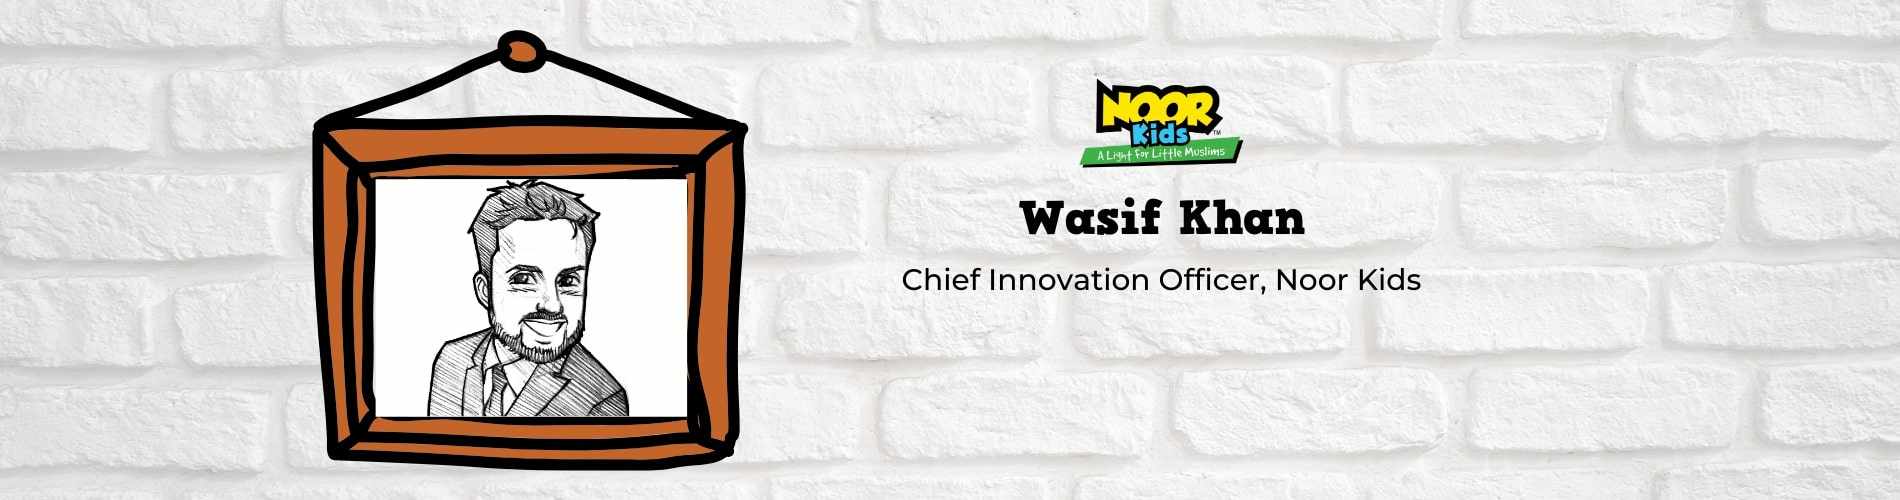 Meet Wasif Khan, Chief Innovation Officer at Noor Kids